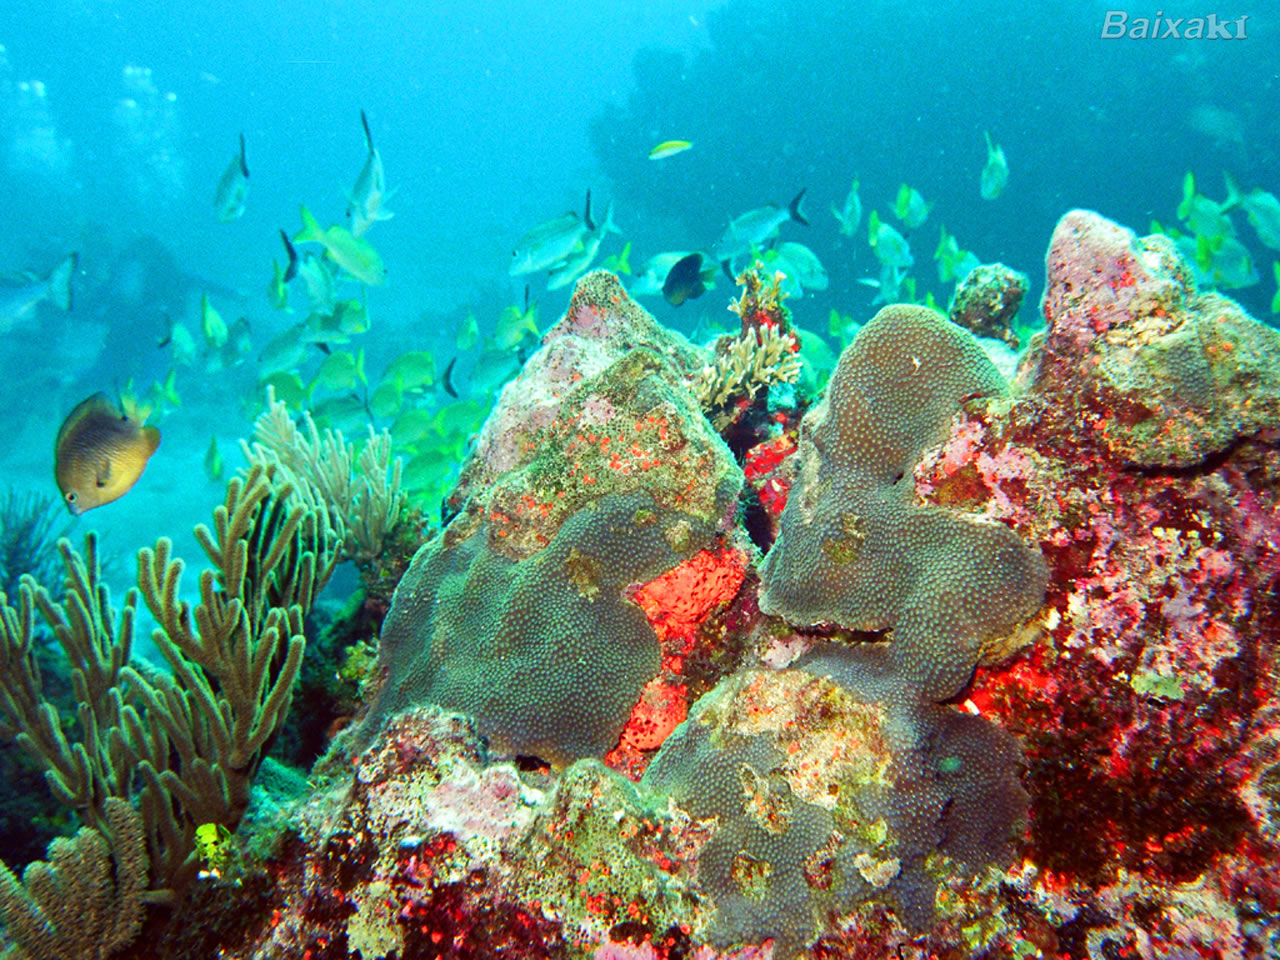 wallpaper fundo do mar,reef,coral reef,underwater,marine biology,natural environment